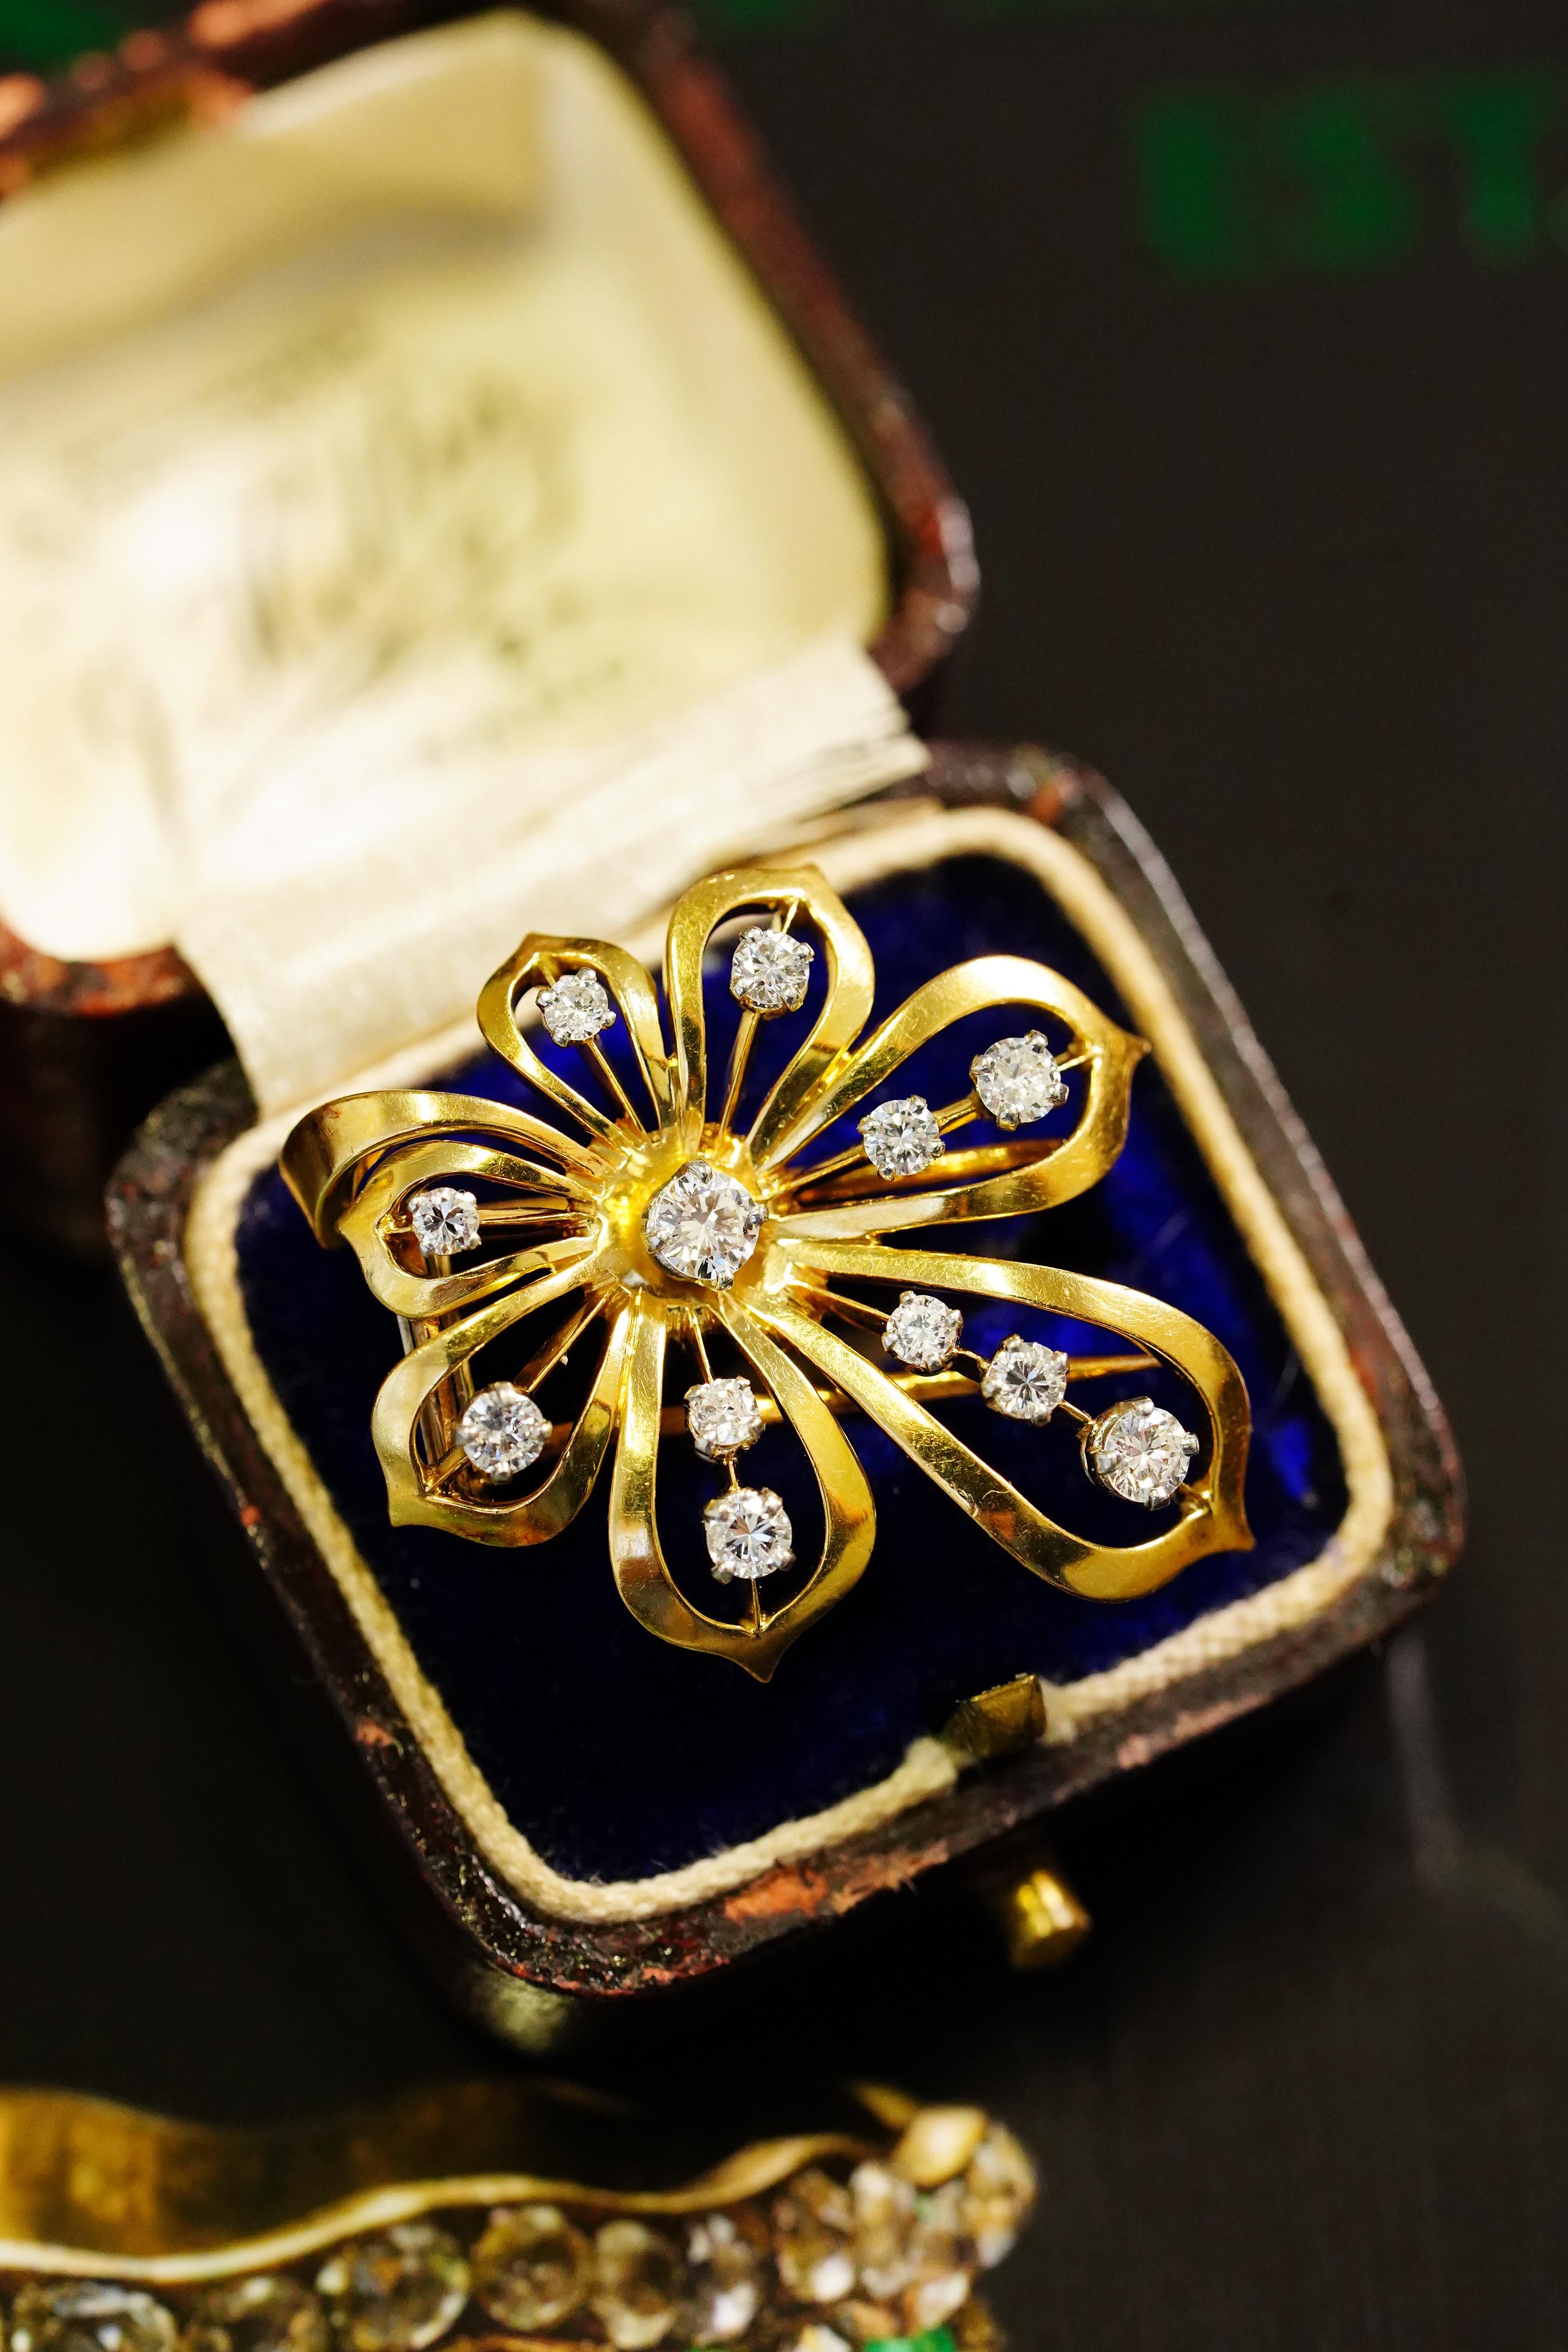 Modern Van Cleef & Arpels Vintage Collection Diamond Set in Yellow Gold Leaf Brooch